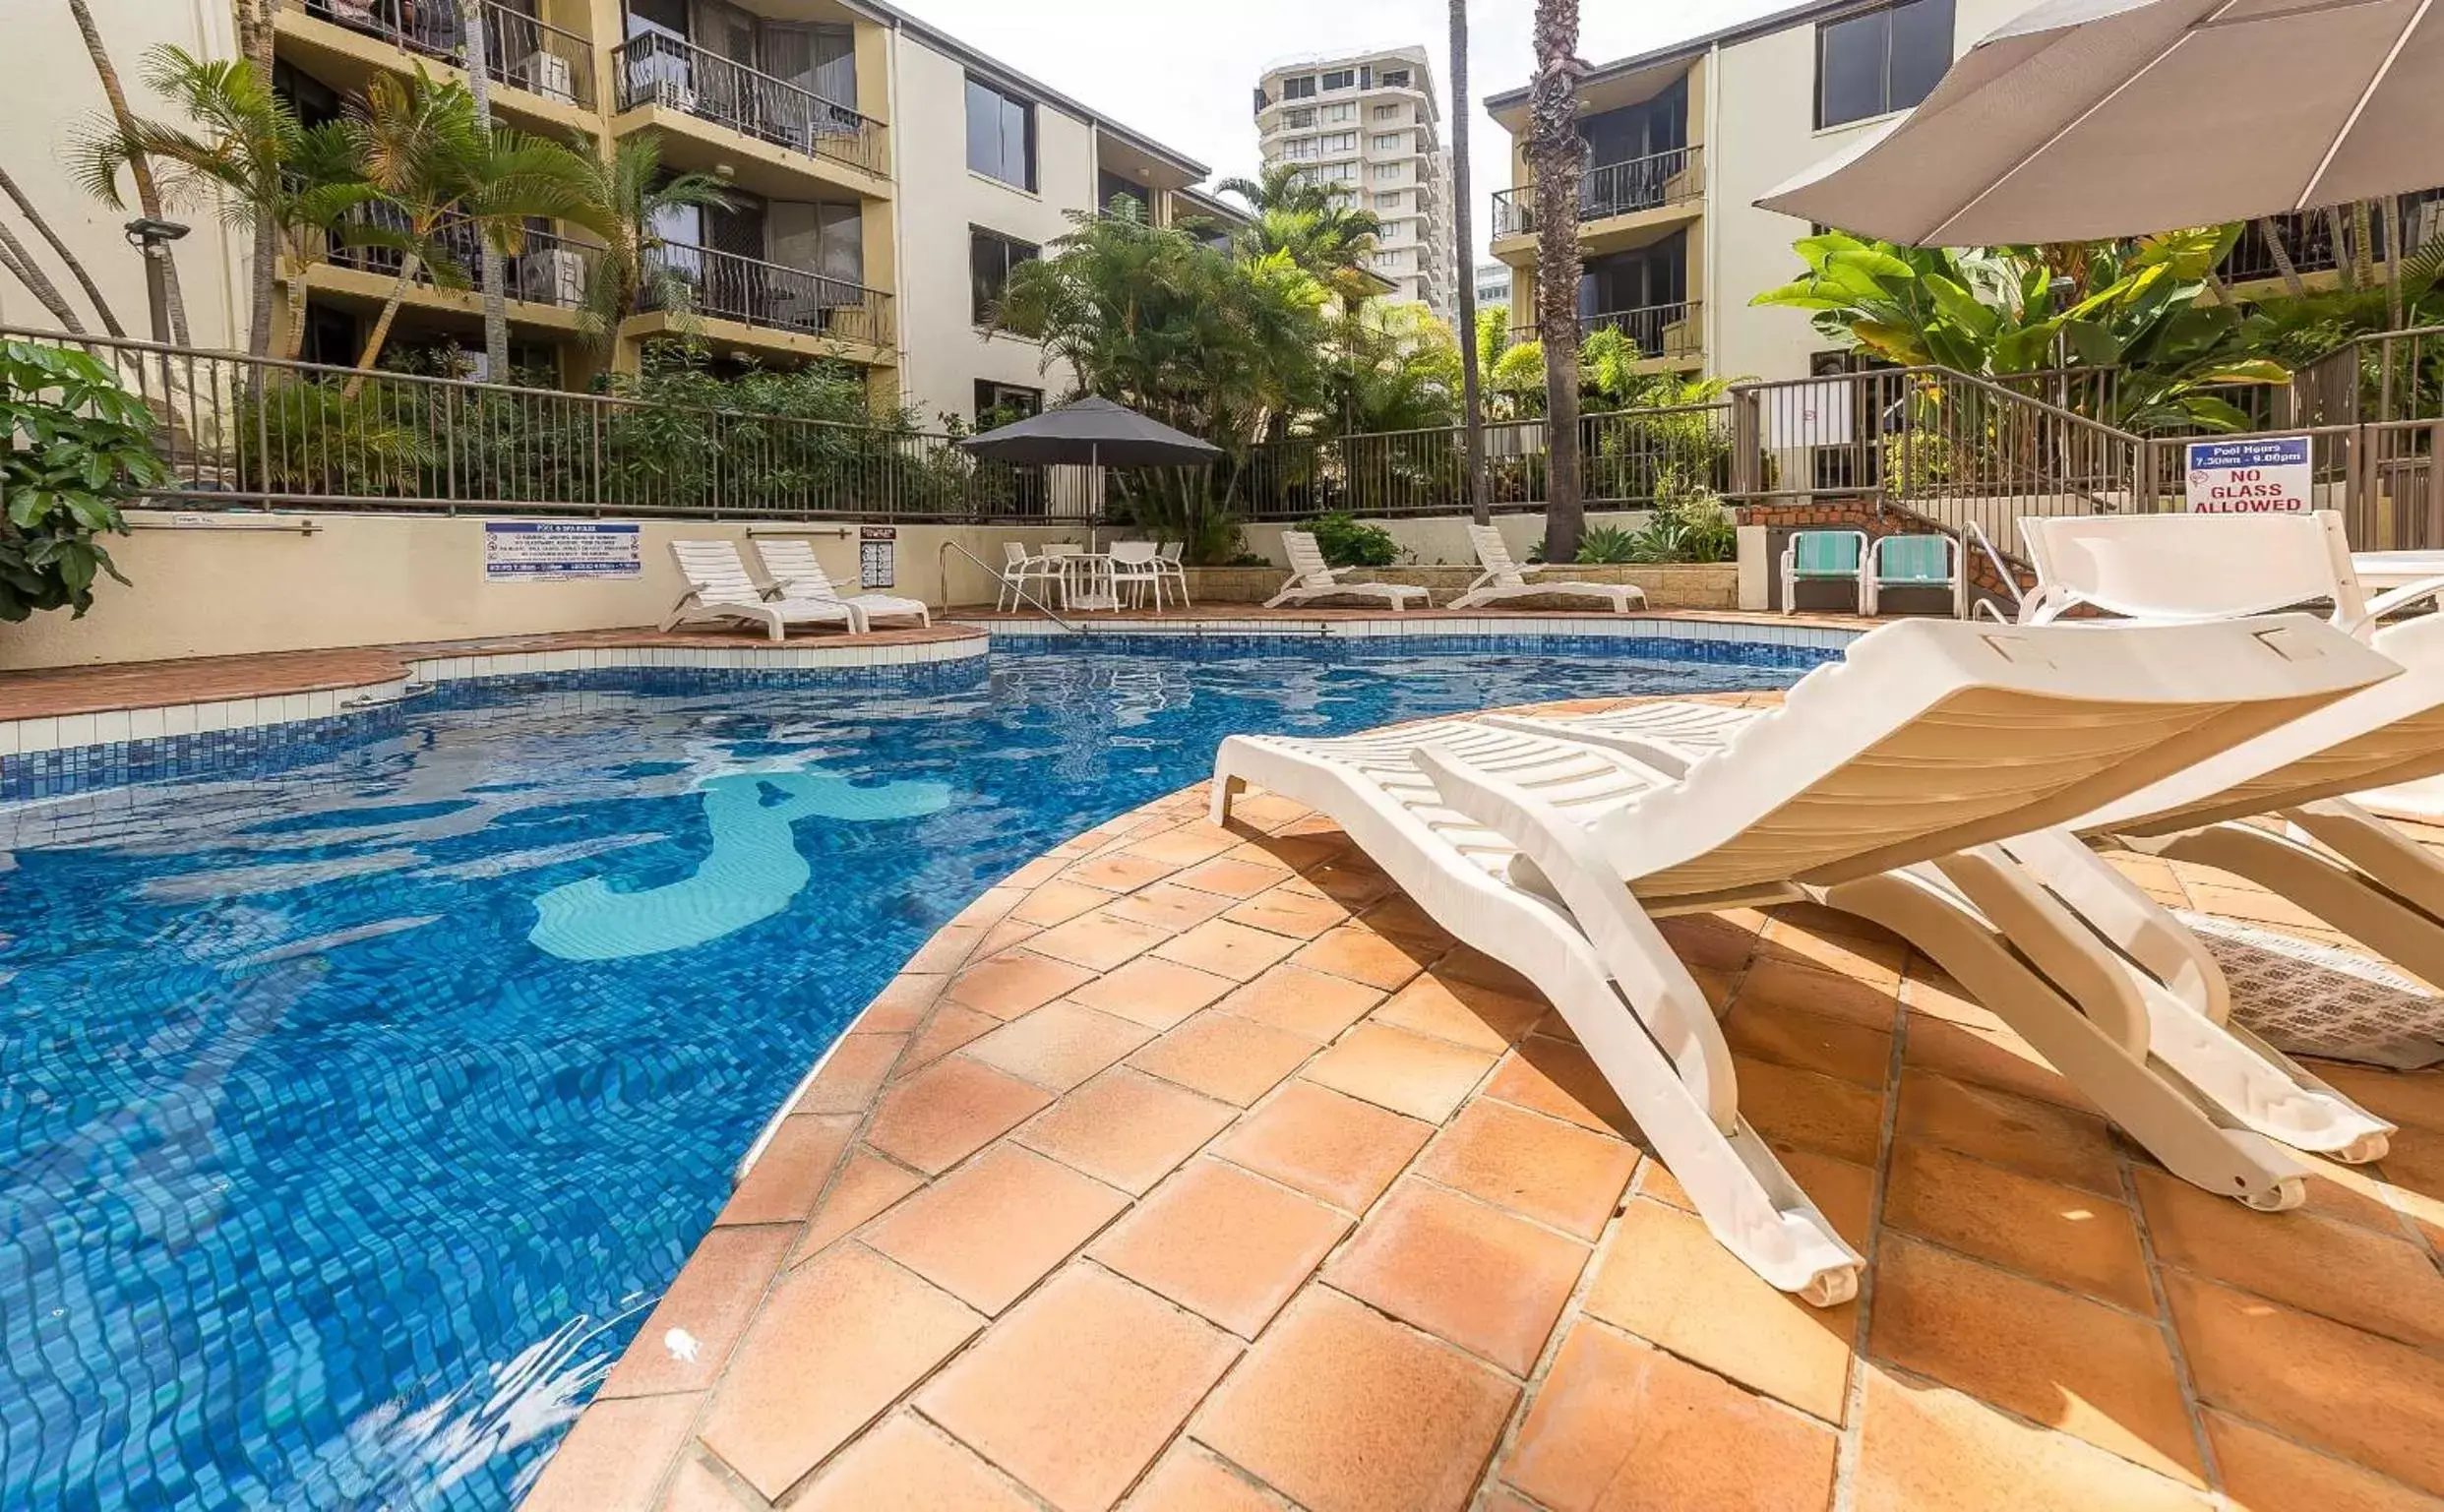 Swimming Pool in Aussie Resort